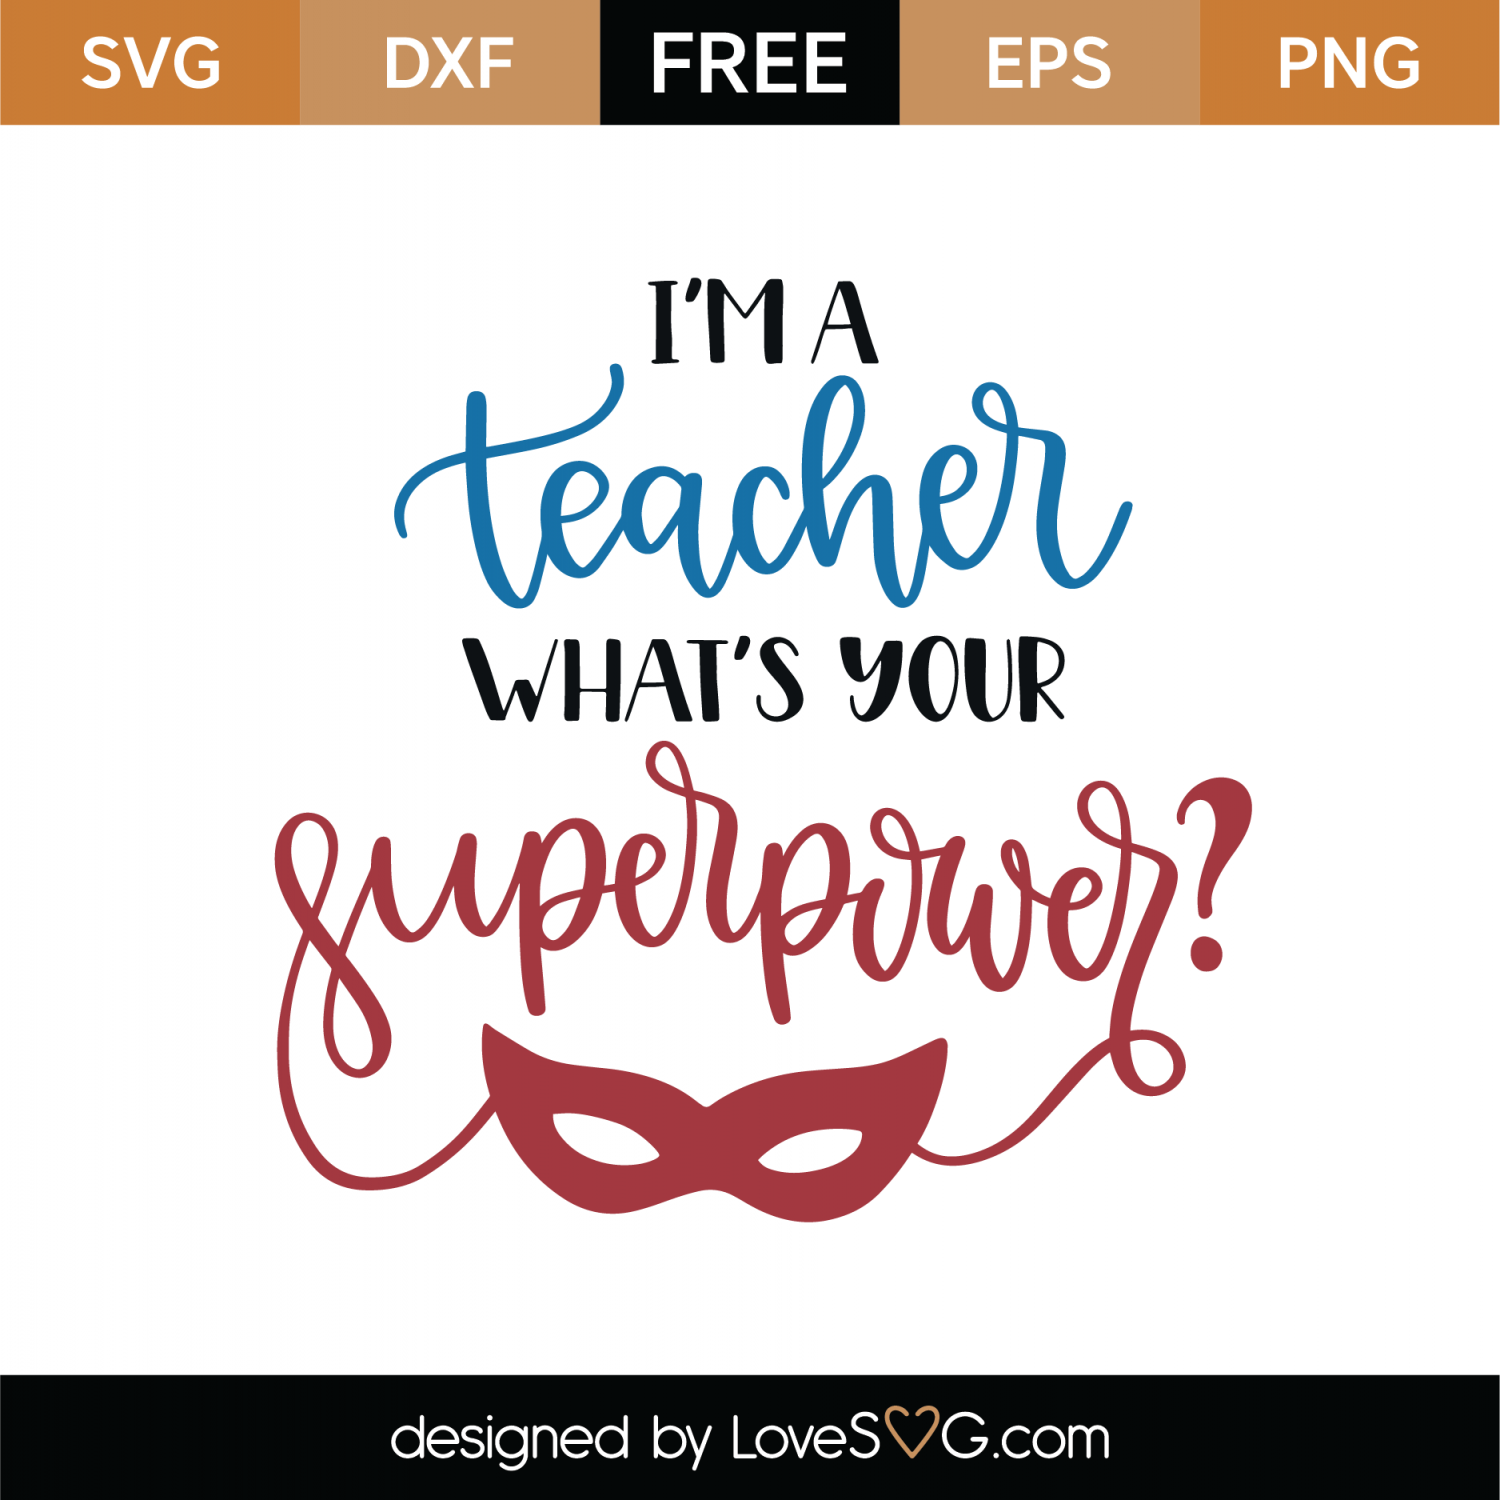 Download Free I'm A Teacher What's Your Super Power SVG Cut File | Lovesvg.com